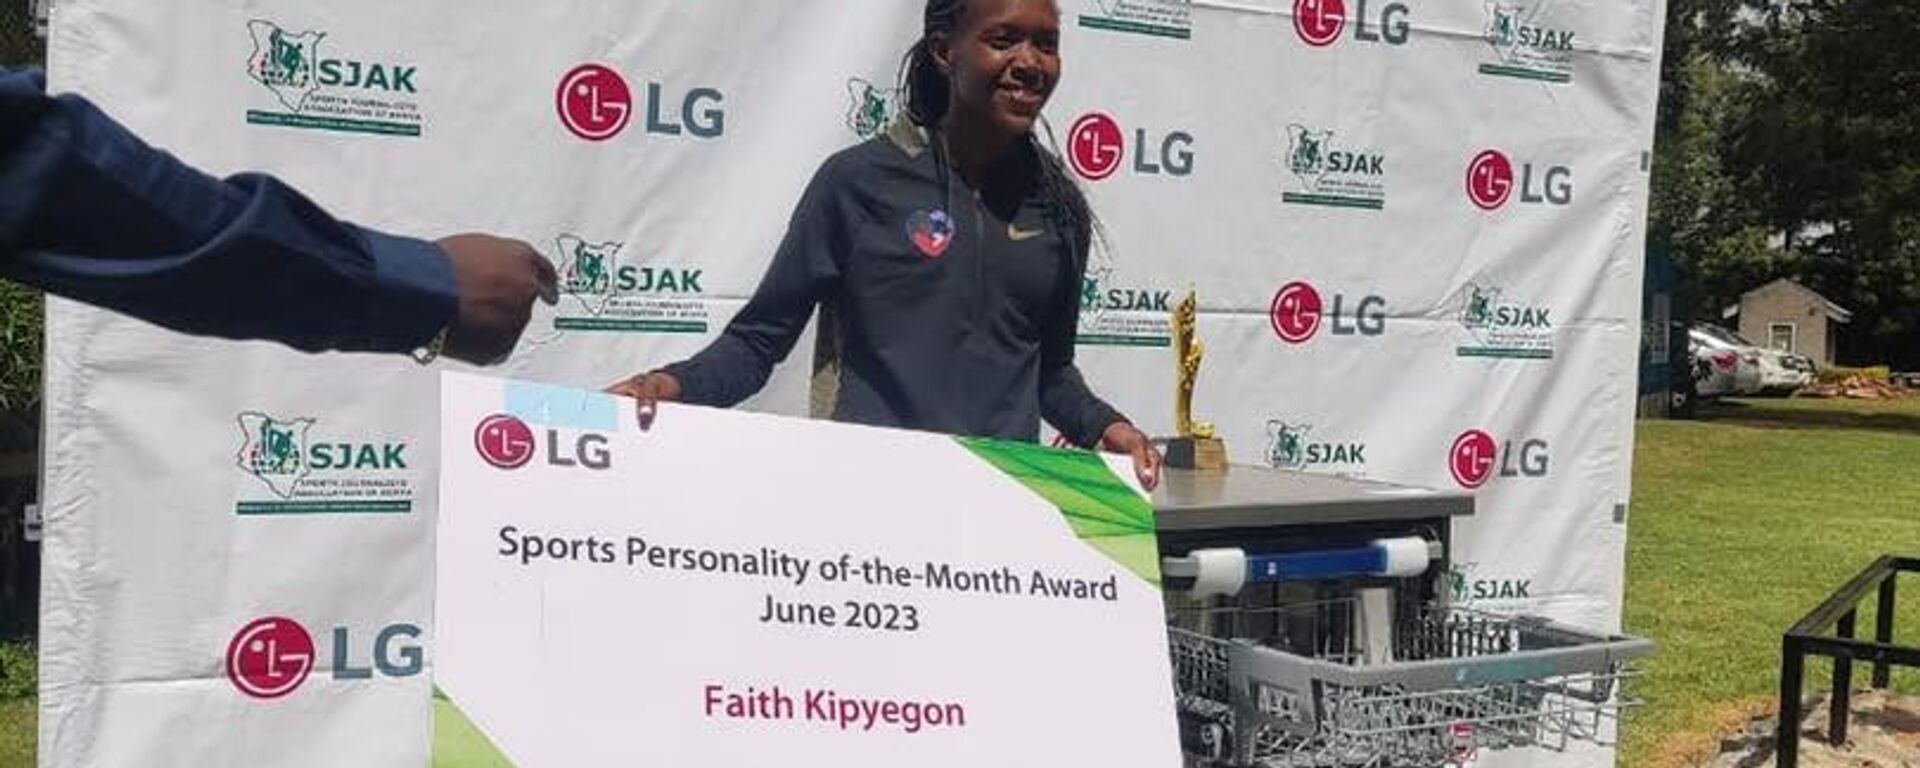 Faith Kipyegon, Kenyan athlete, receives SJAK Sports Personality Of The Month June Award - Sputnik Africa, 1920, 07.07.2023